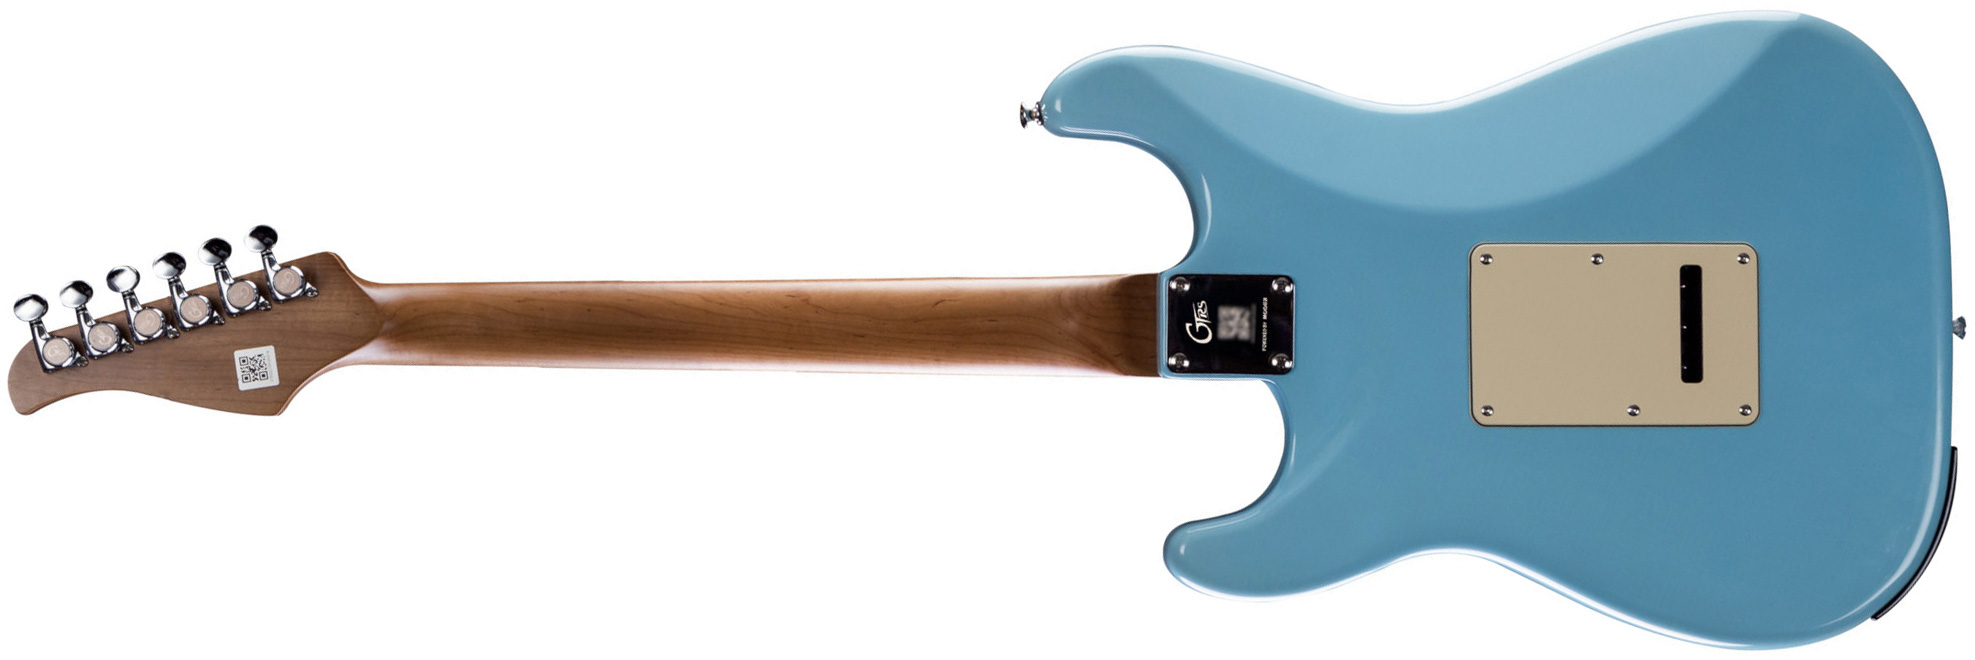 Mooer Gtrs P800 Pro Intelligent Guitar Hss Trem Rw - Tiffany Blue - MIDI / Digital elektrische gitaar - Variation 1